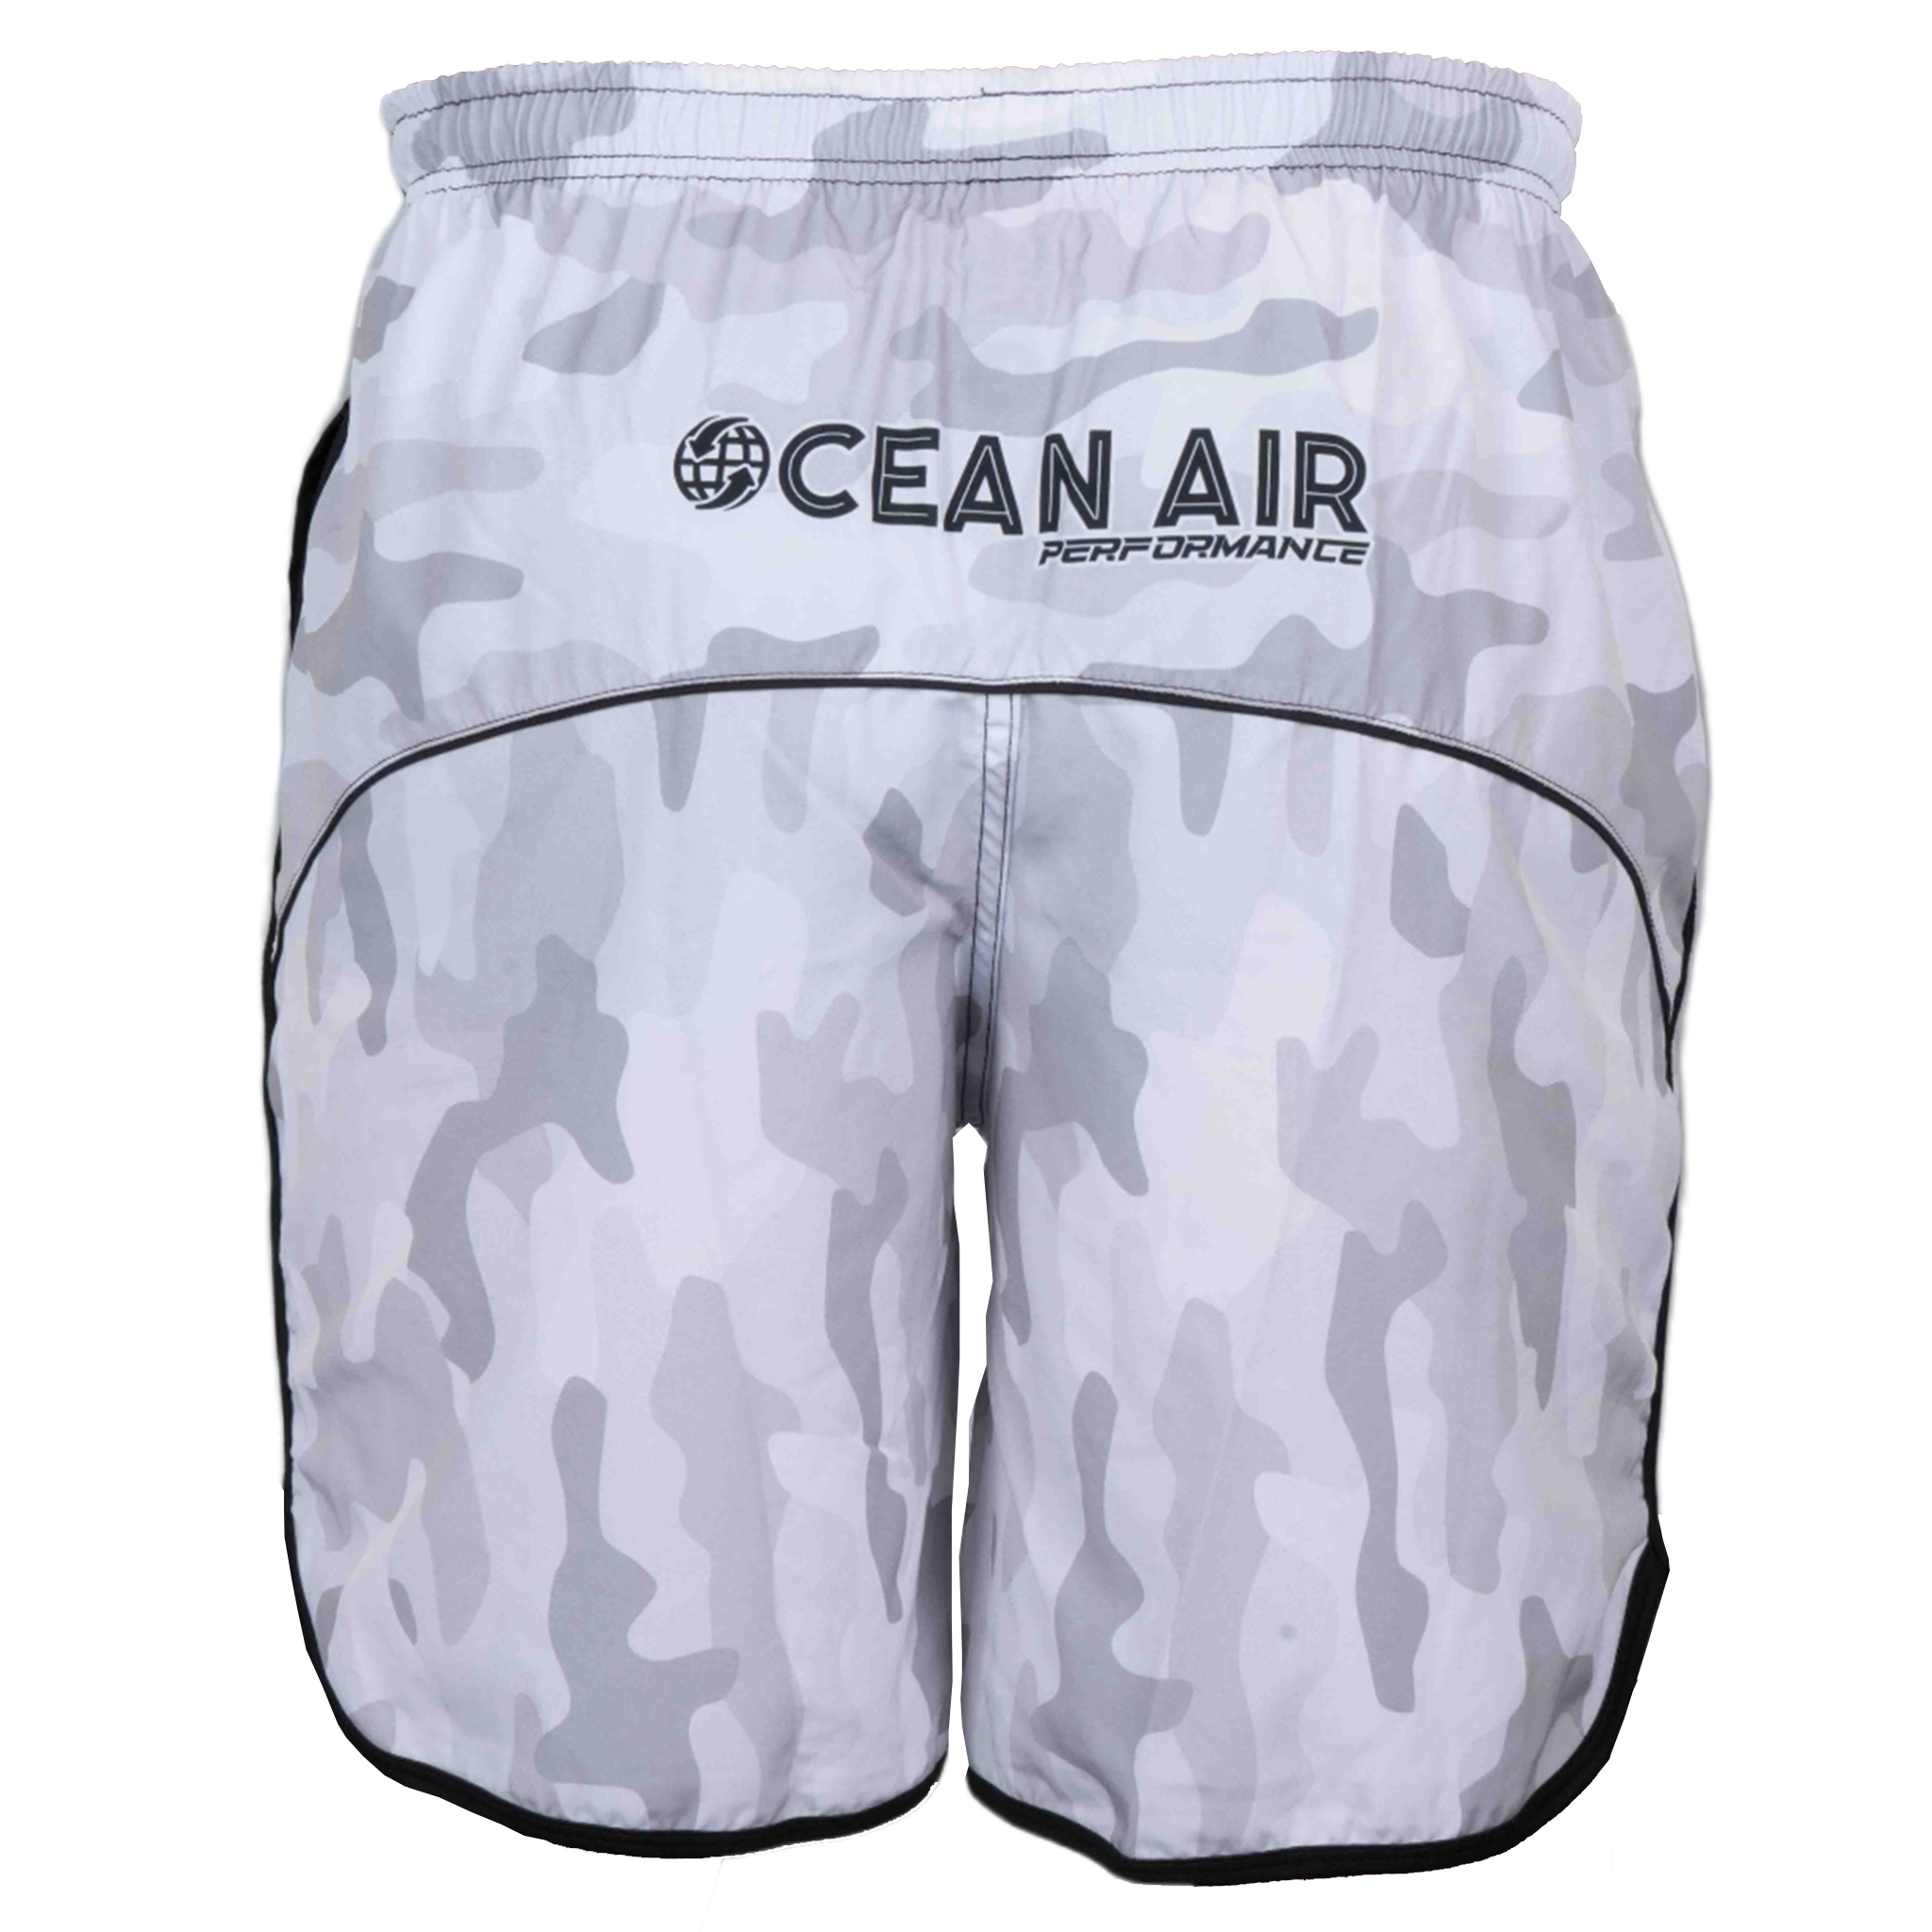 Ocean Air Camo Short